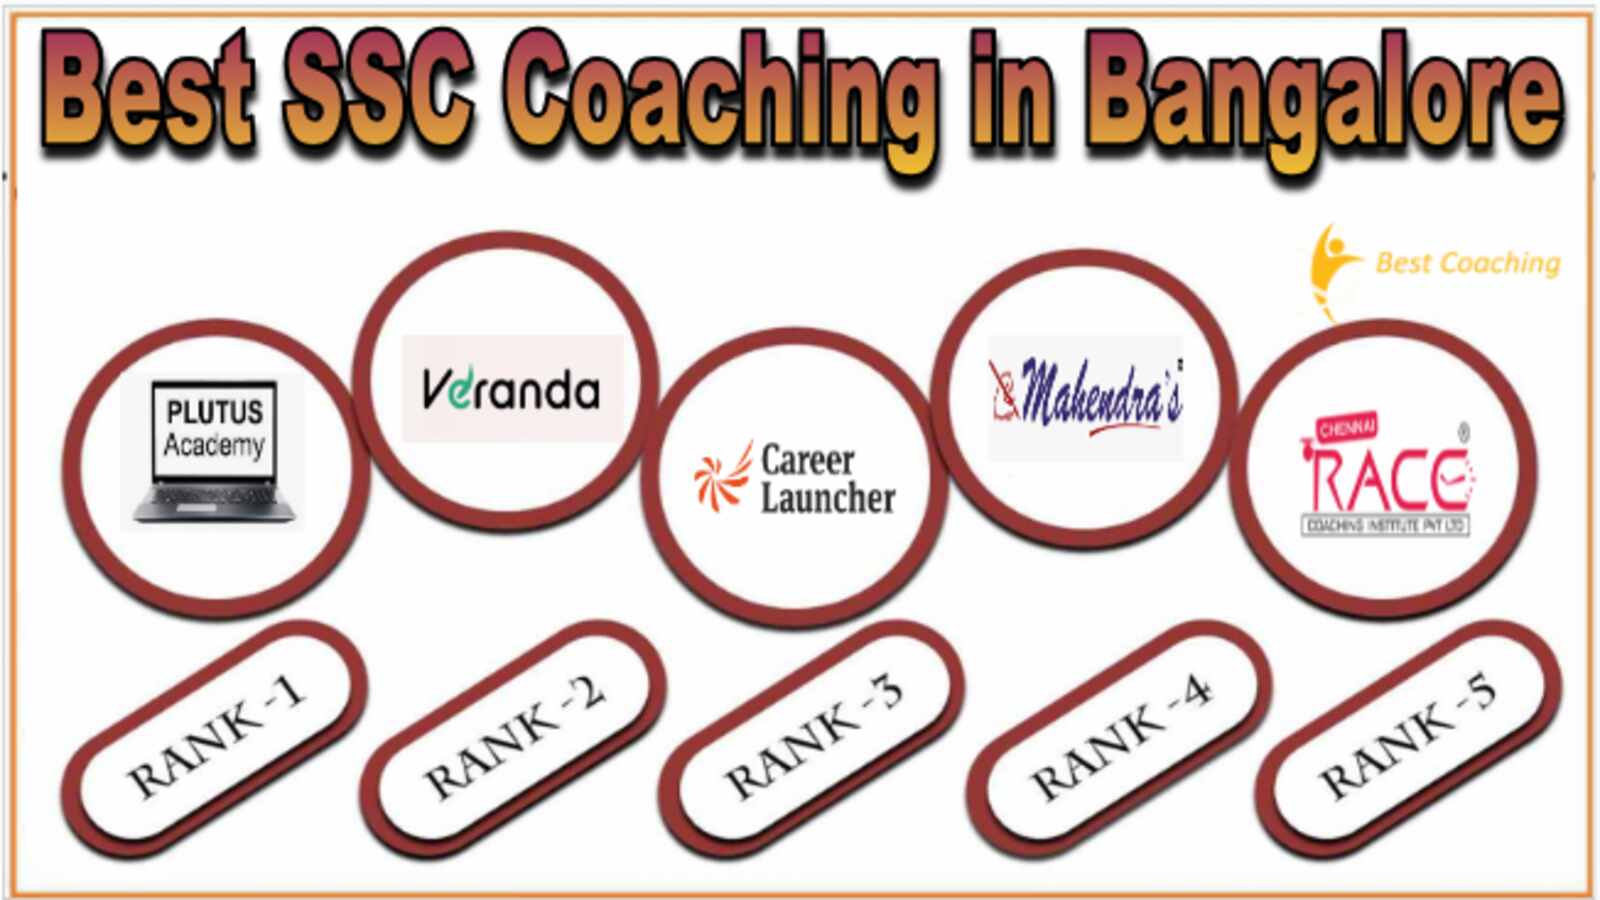 Best SSC Coaching Institute in Bangalore